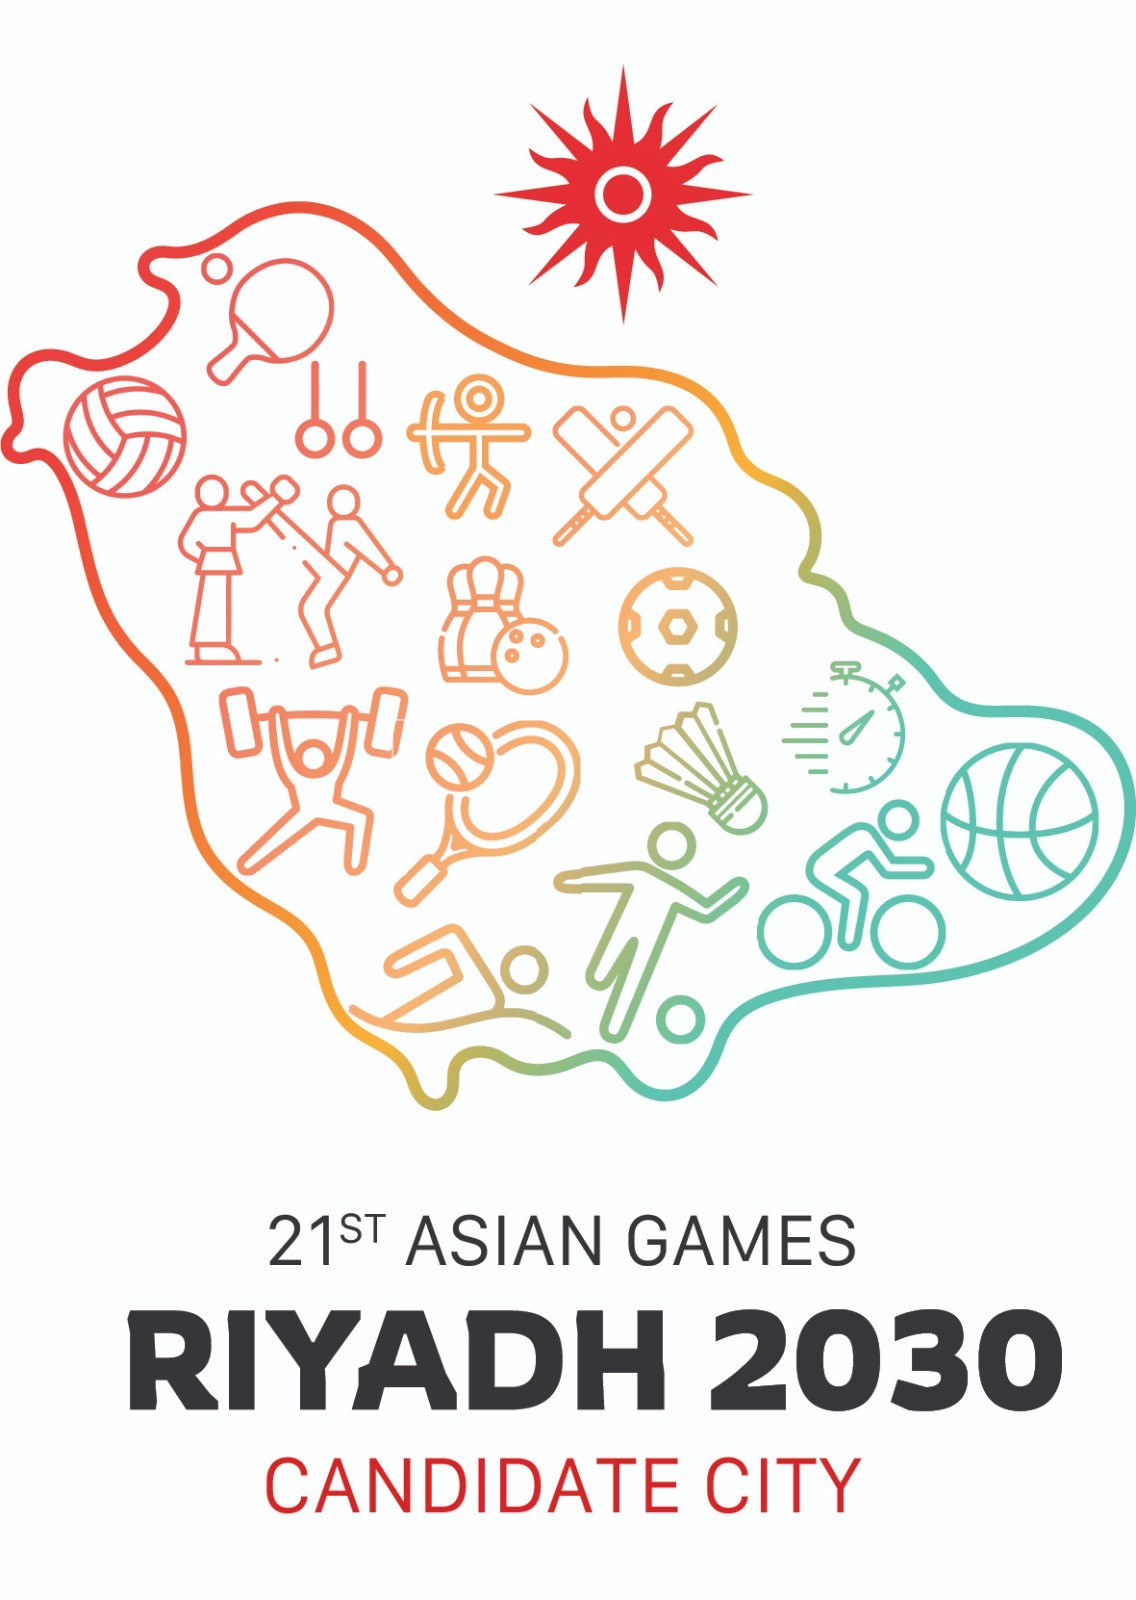 Riyadh claims 2030 Asian Games would help transform Saudi society